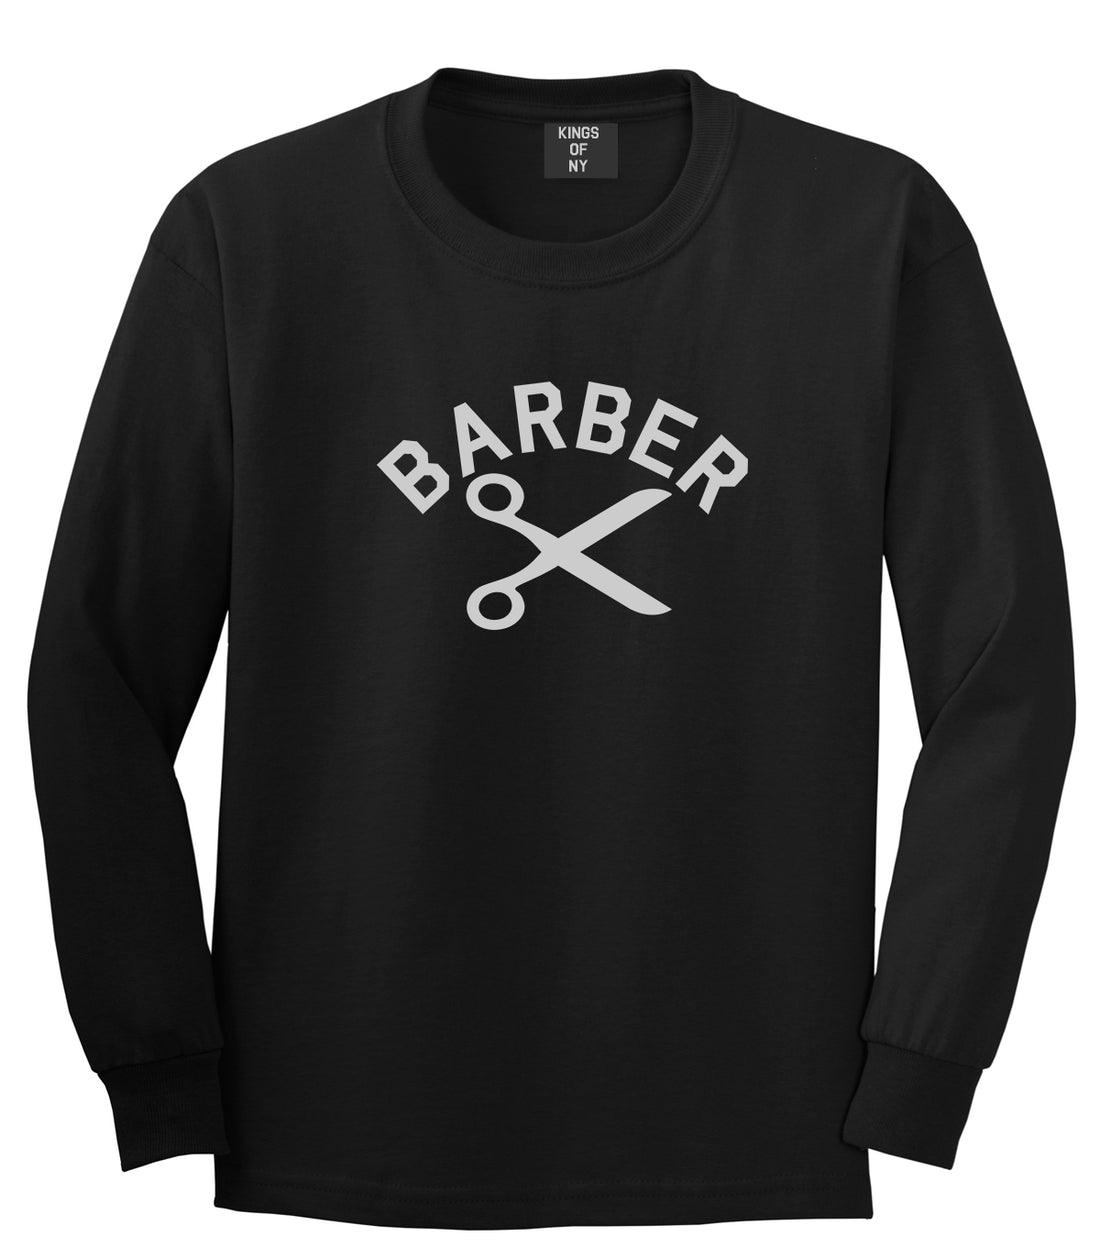 Barber Scissors Black Long Sleeve T-Shirt by Kings Of NY